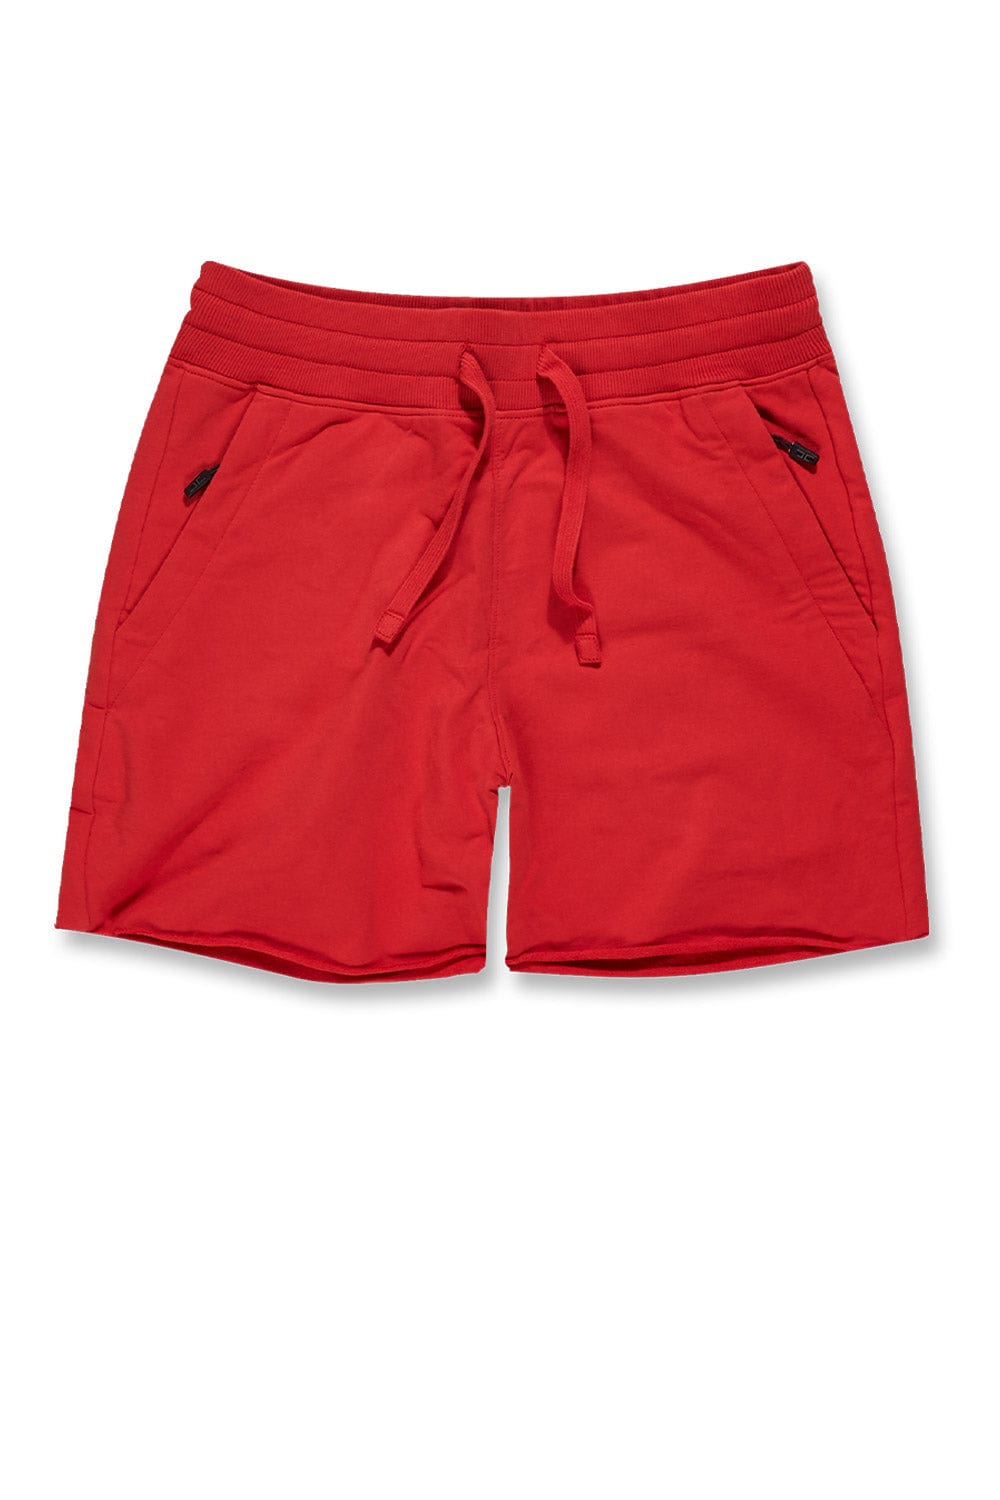 Jordan Craig Athletic - Summer Breeze Knit Shorts Red / S